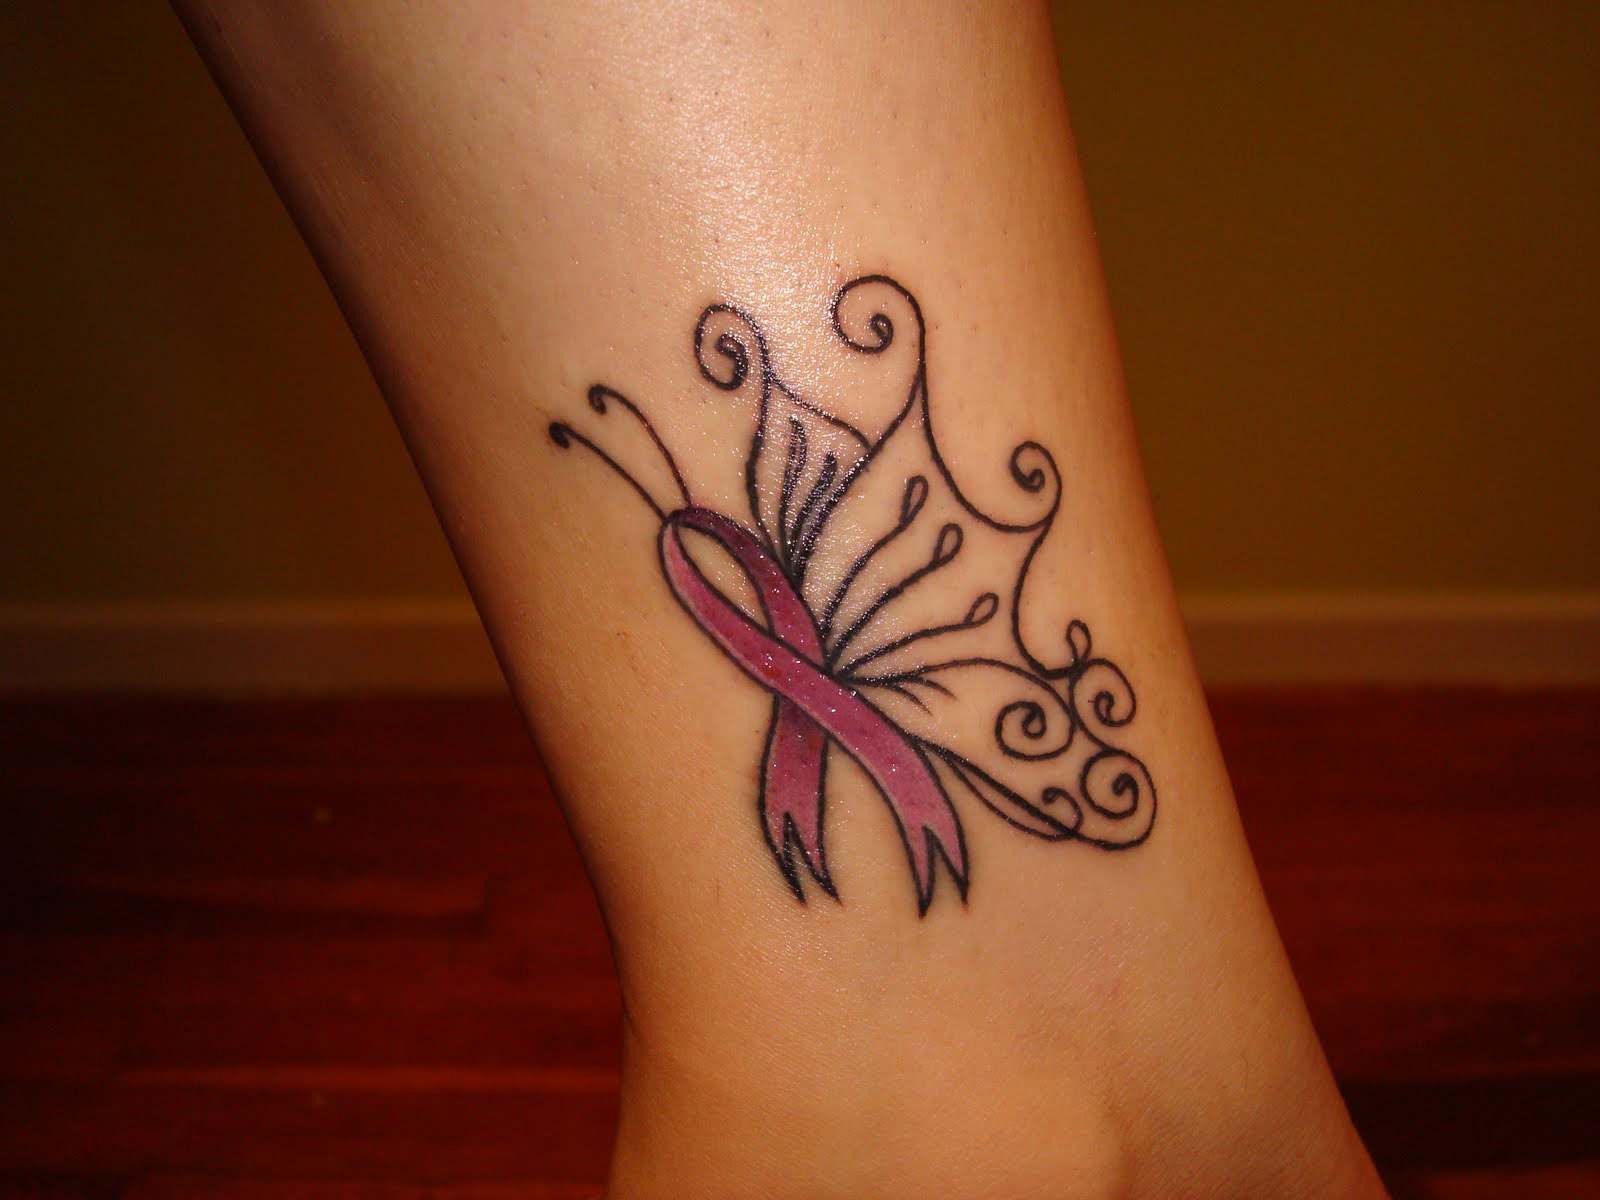 Colon Cancer Tattoo Ideas - wide 8